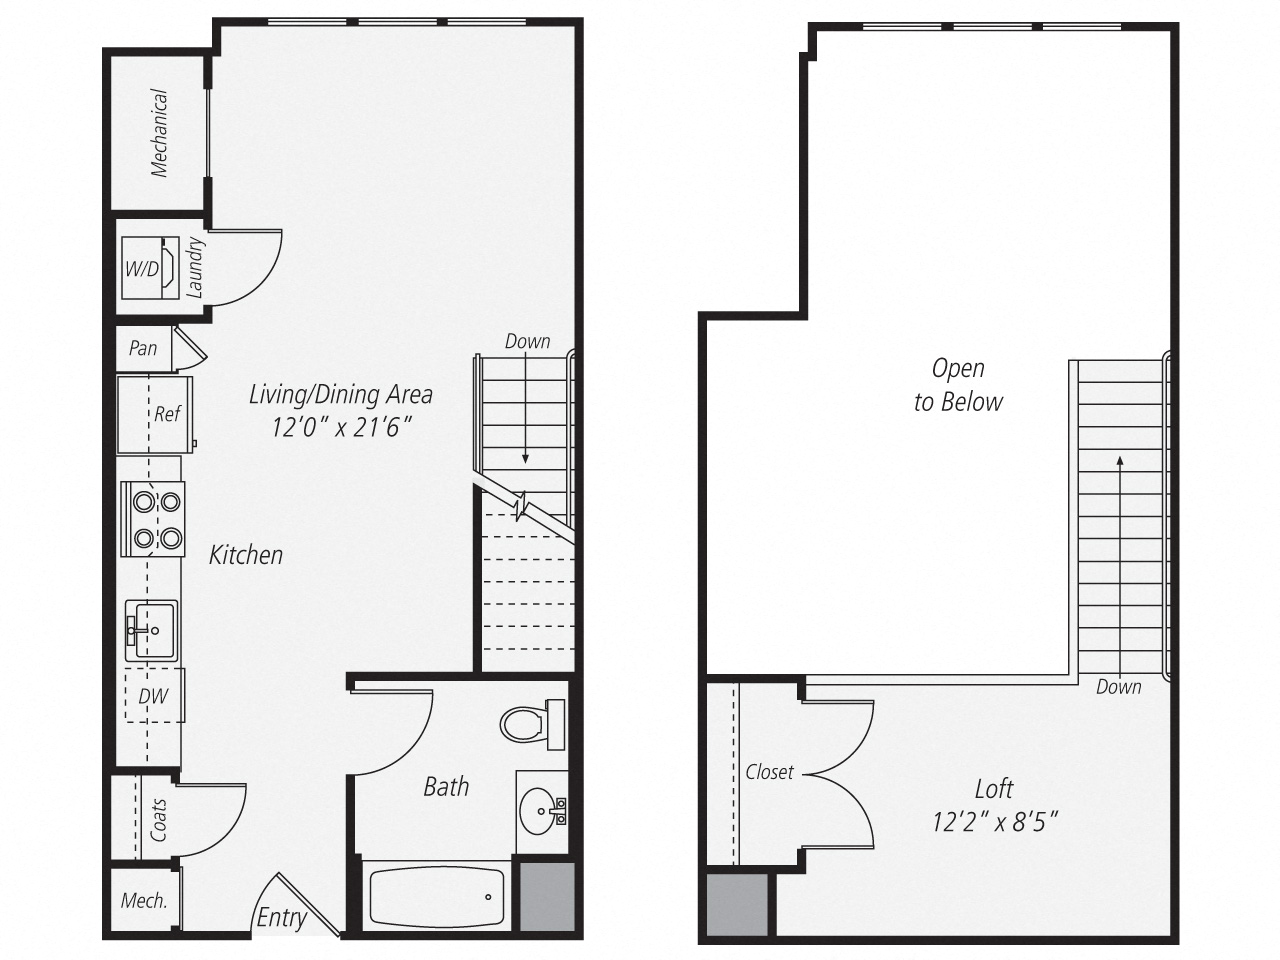 Floorplan for Apartment #443, 0 bedroom unit at Halstead Norwalk